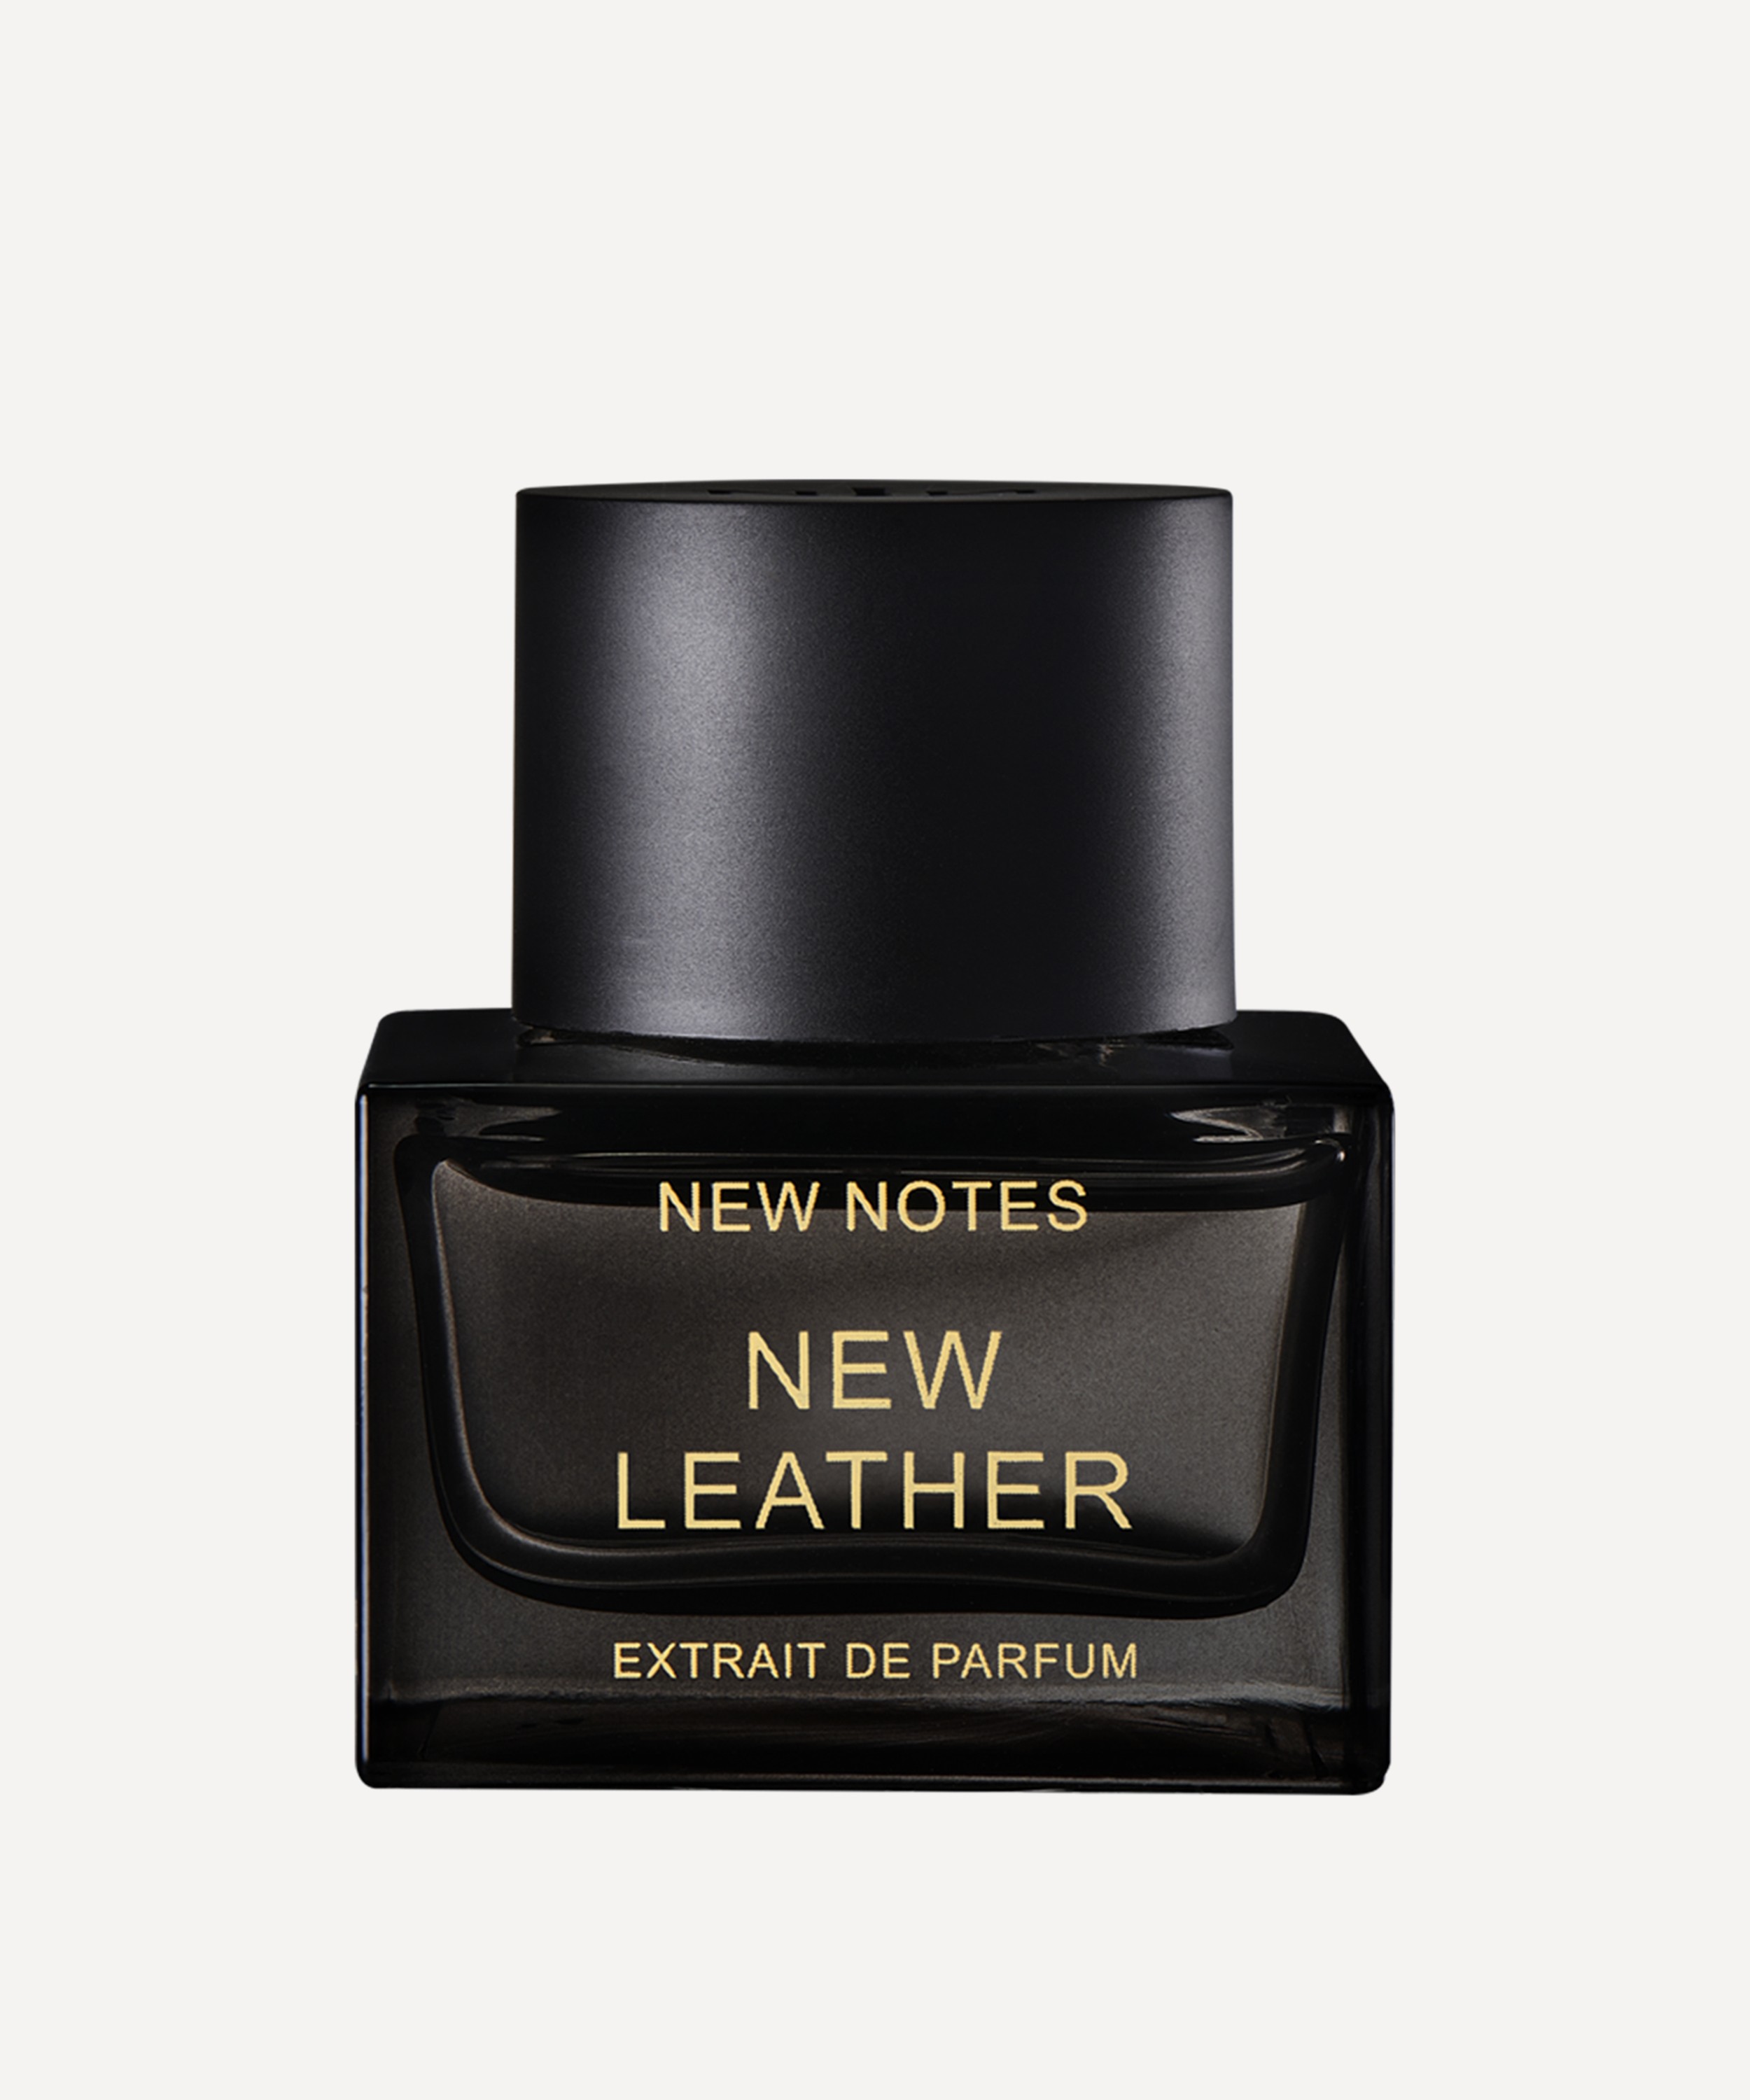 New Notes - New Leather Extrait de Parfum 50ml image number 0